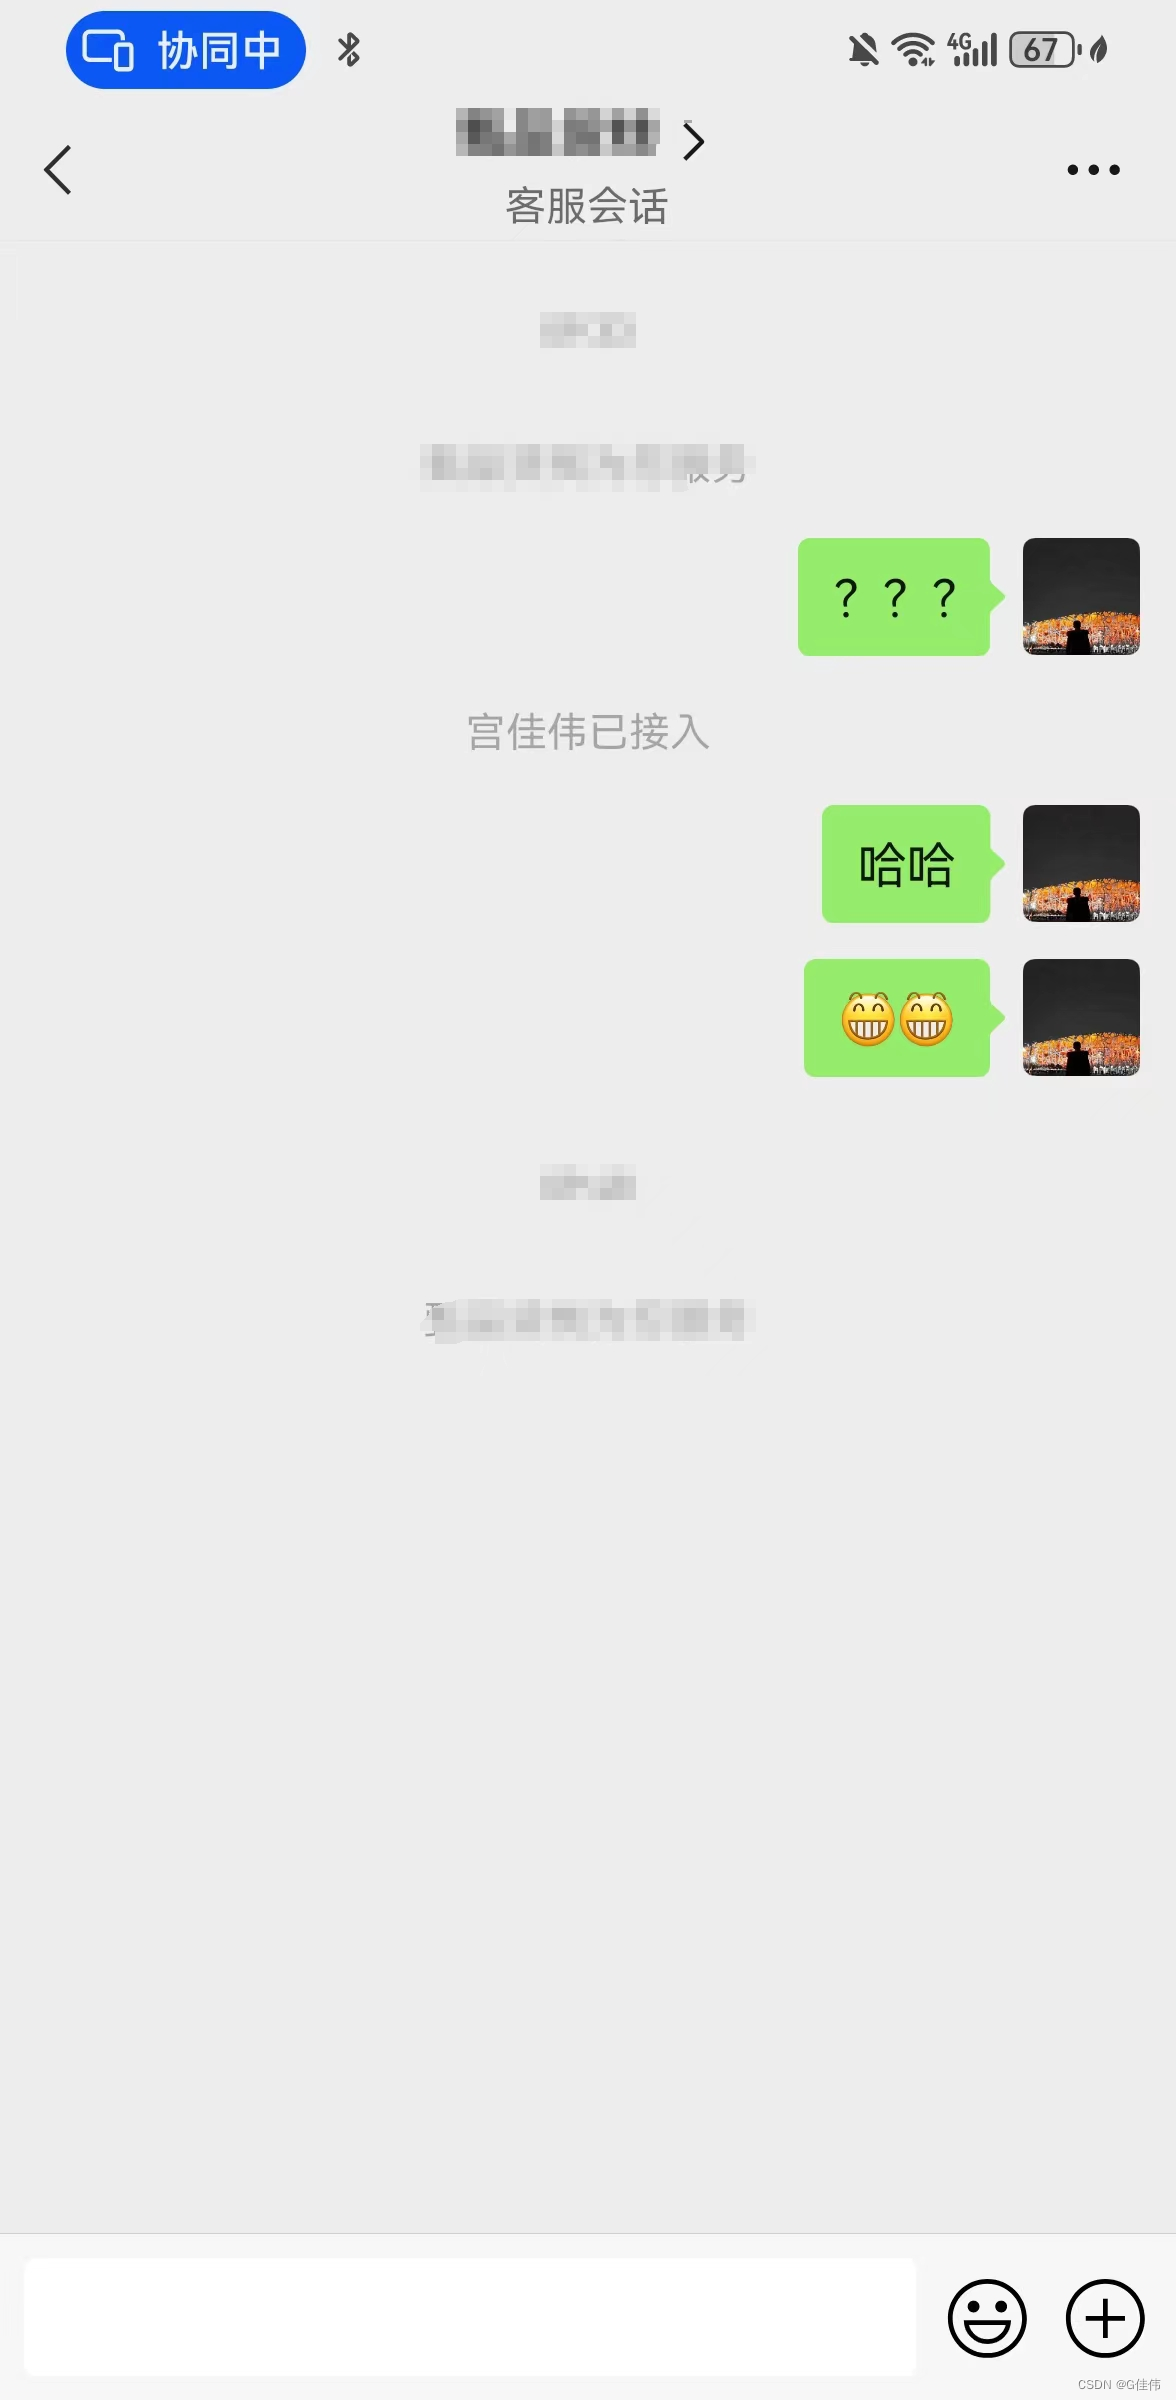 WeChat ミニ プログラム内のミニ プログラム カスタマー サービスにアクセスし、現在のカスタマー サービス ステータスを設定する 3 つのステップ